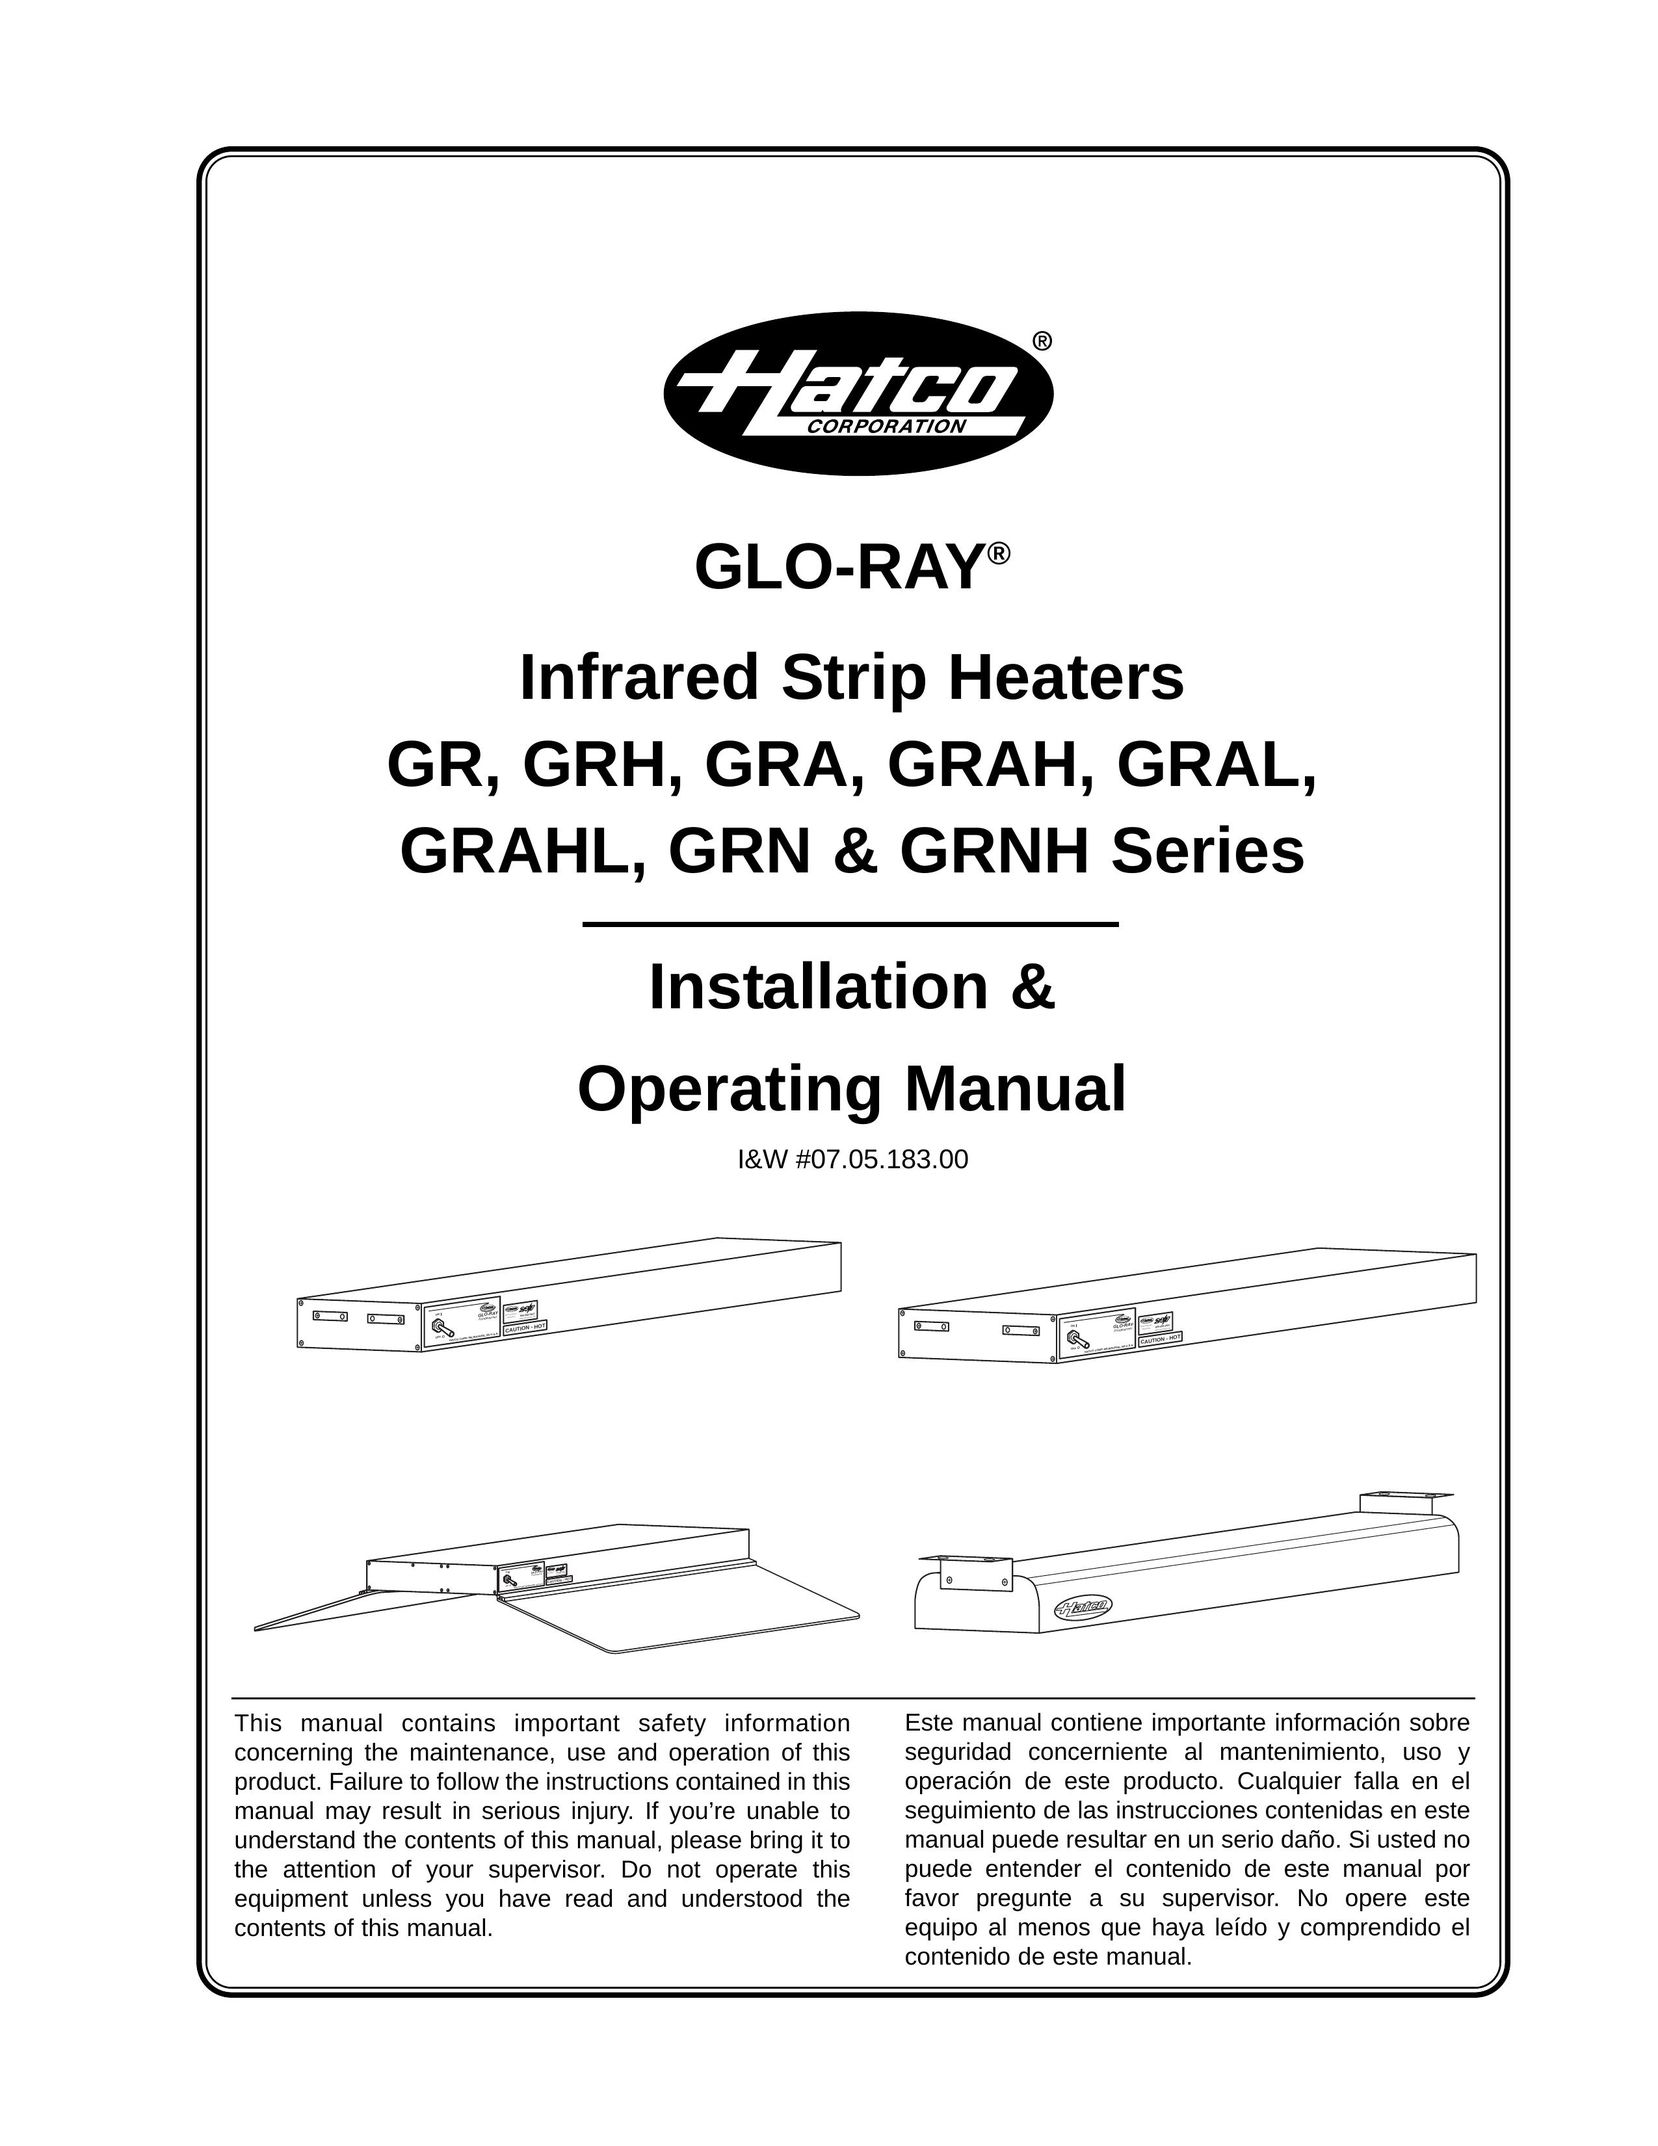 Hatco GRNH Printer Accessories User Manual